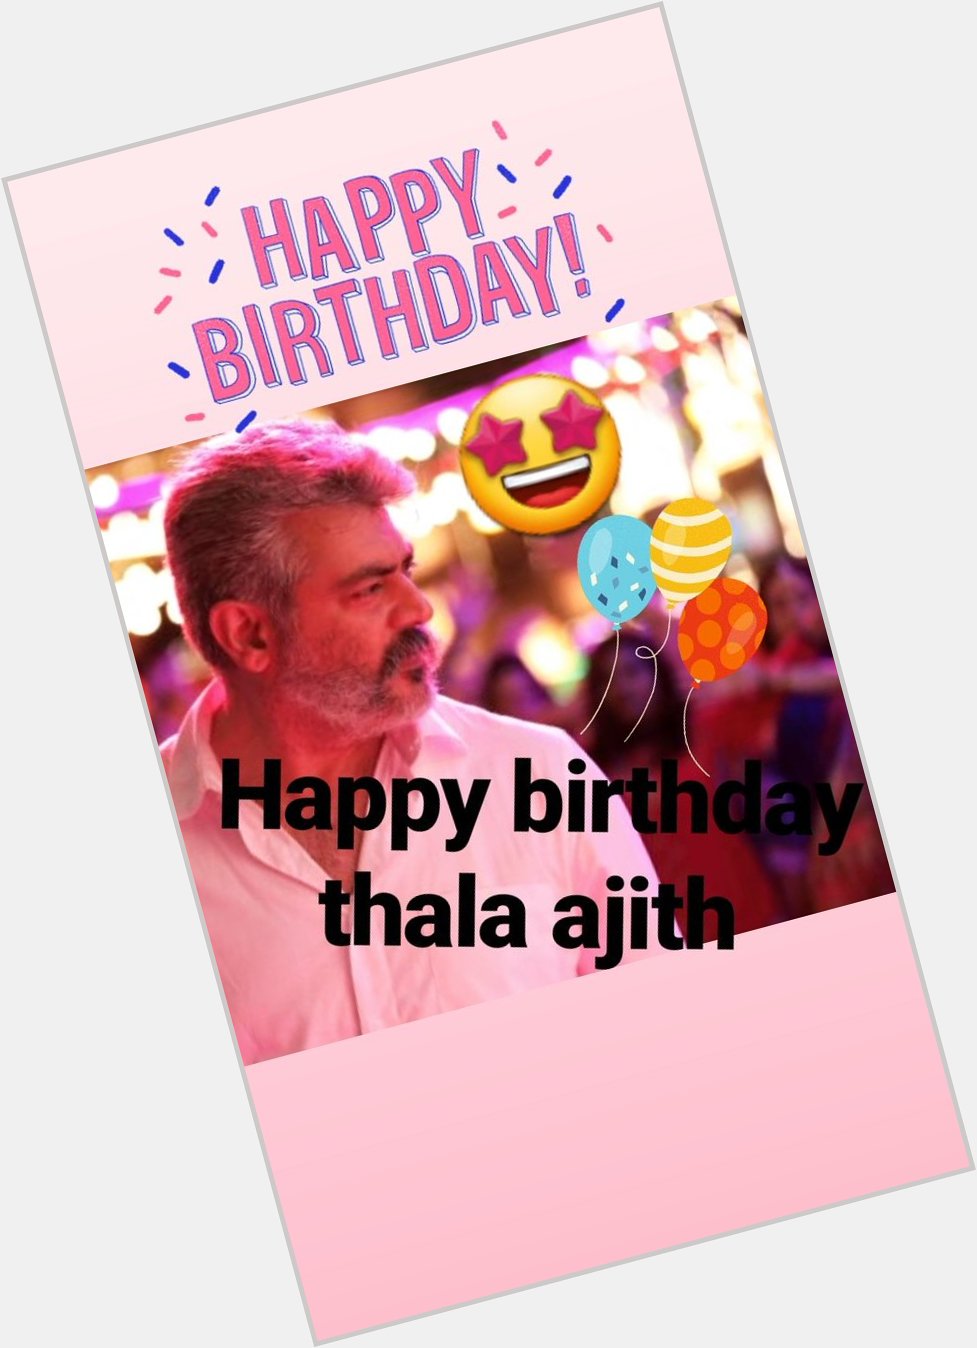 Happy birthday thala ajith kumar 
1 may 2019 
48th birthday 